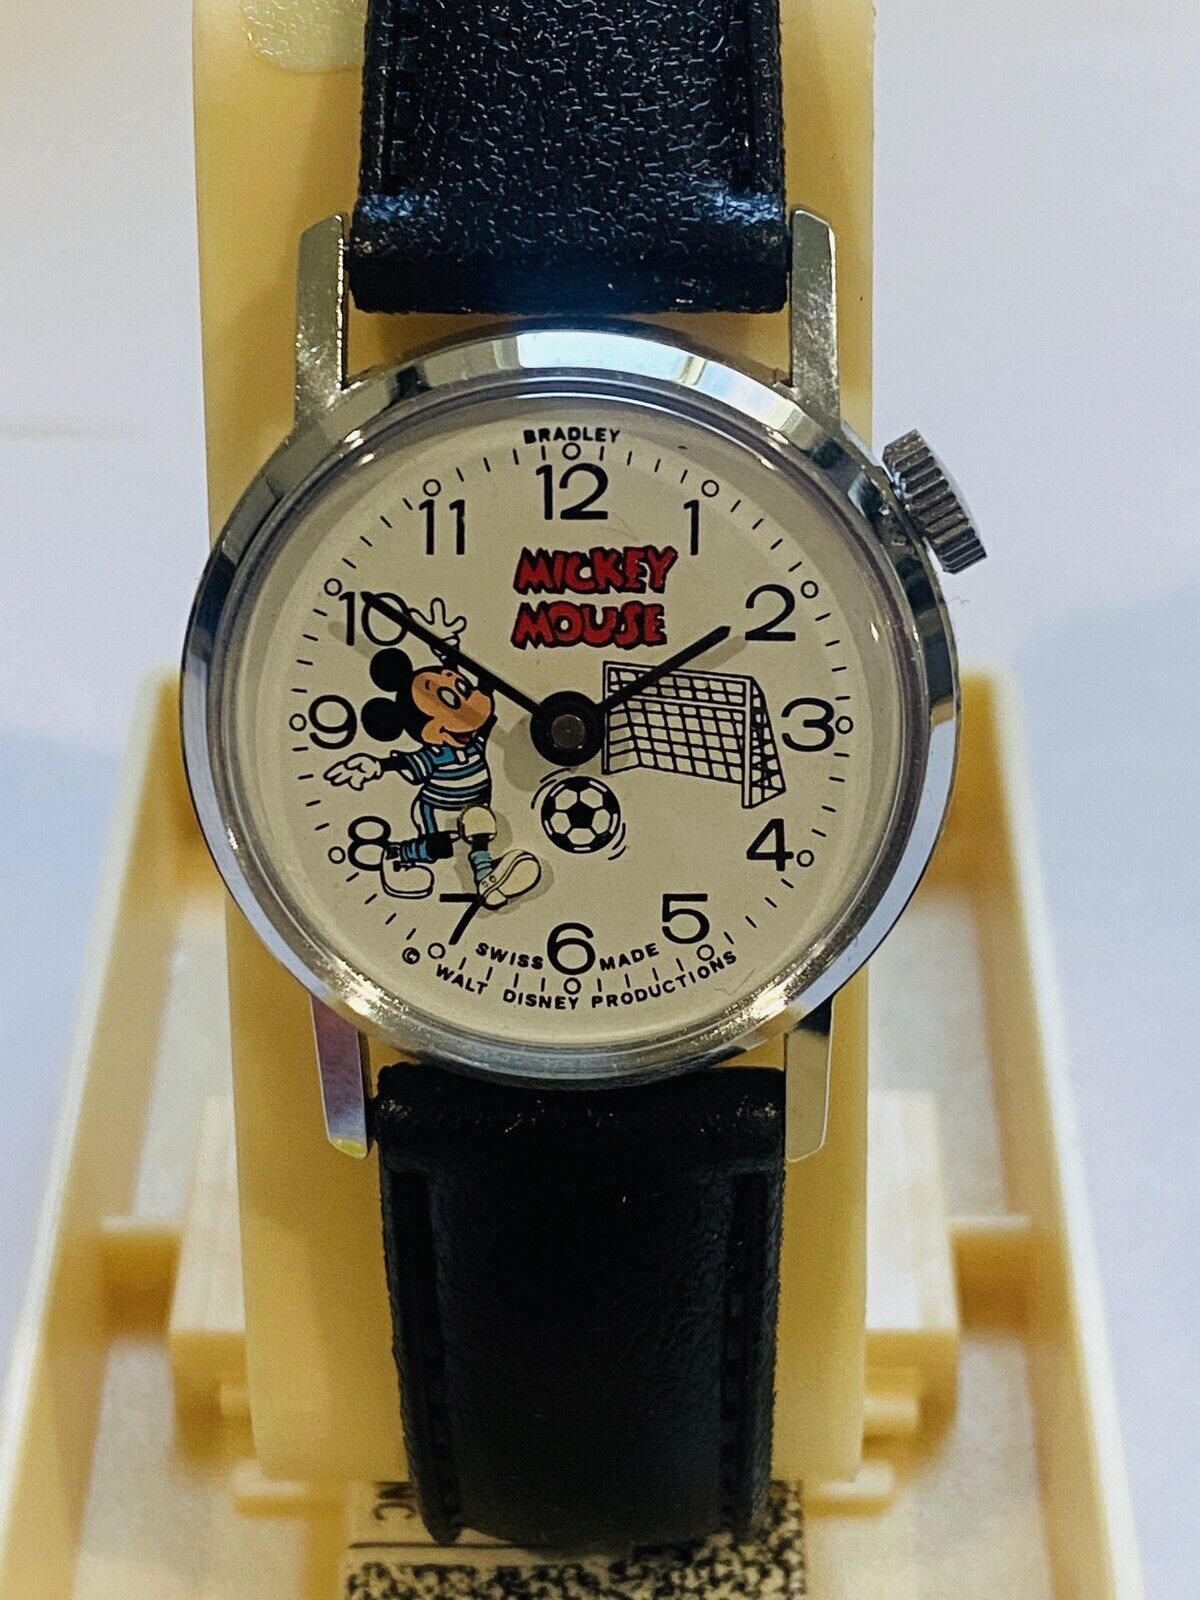 NOS 1978 Mickey Mouse Disney Bradley Swiss Motion Soccer Watch Wind Runs Great